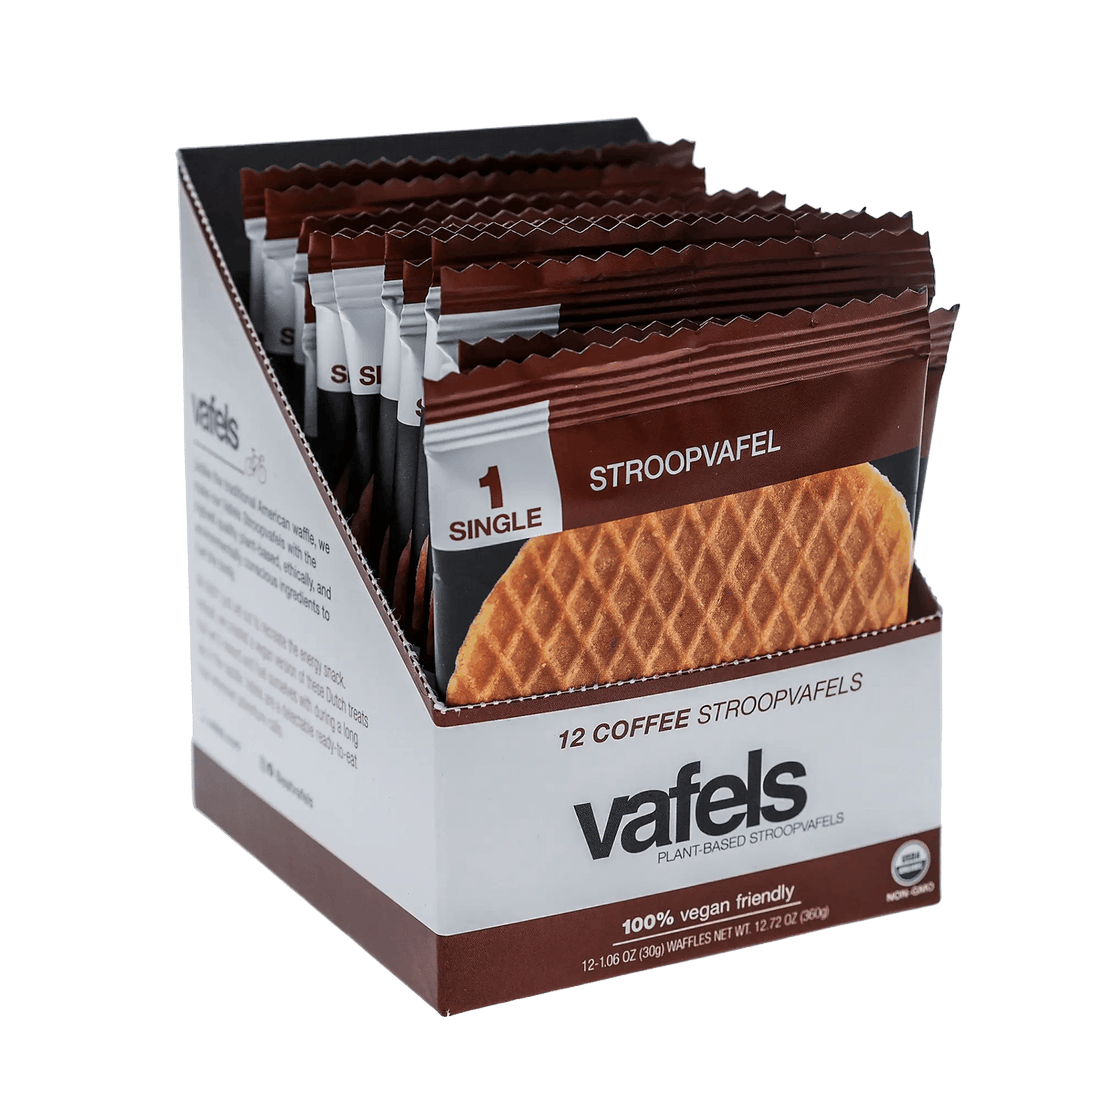 Coffee Stroopvafels - Box of 12 - Vafels